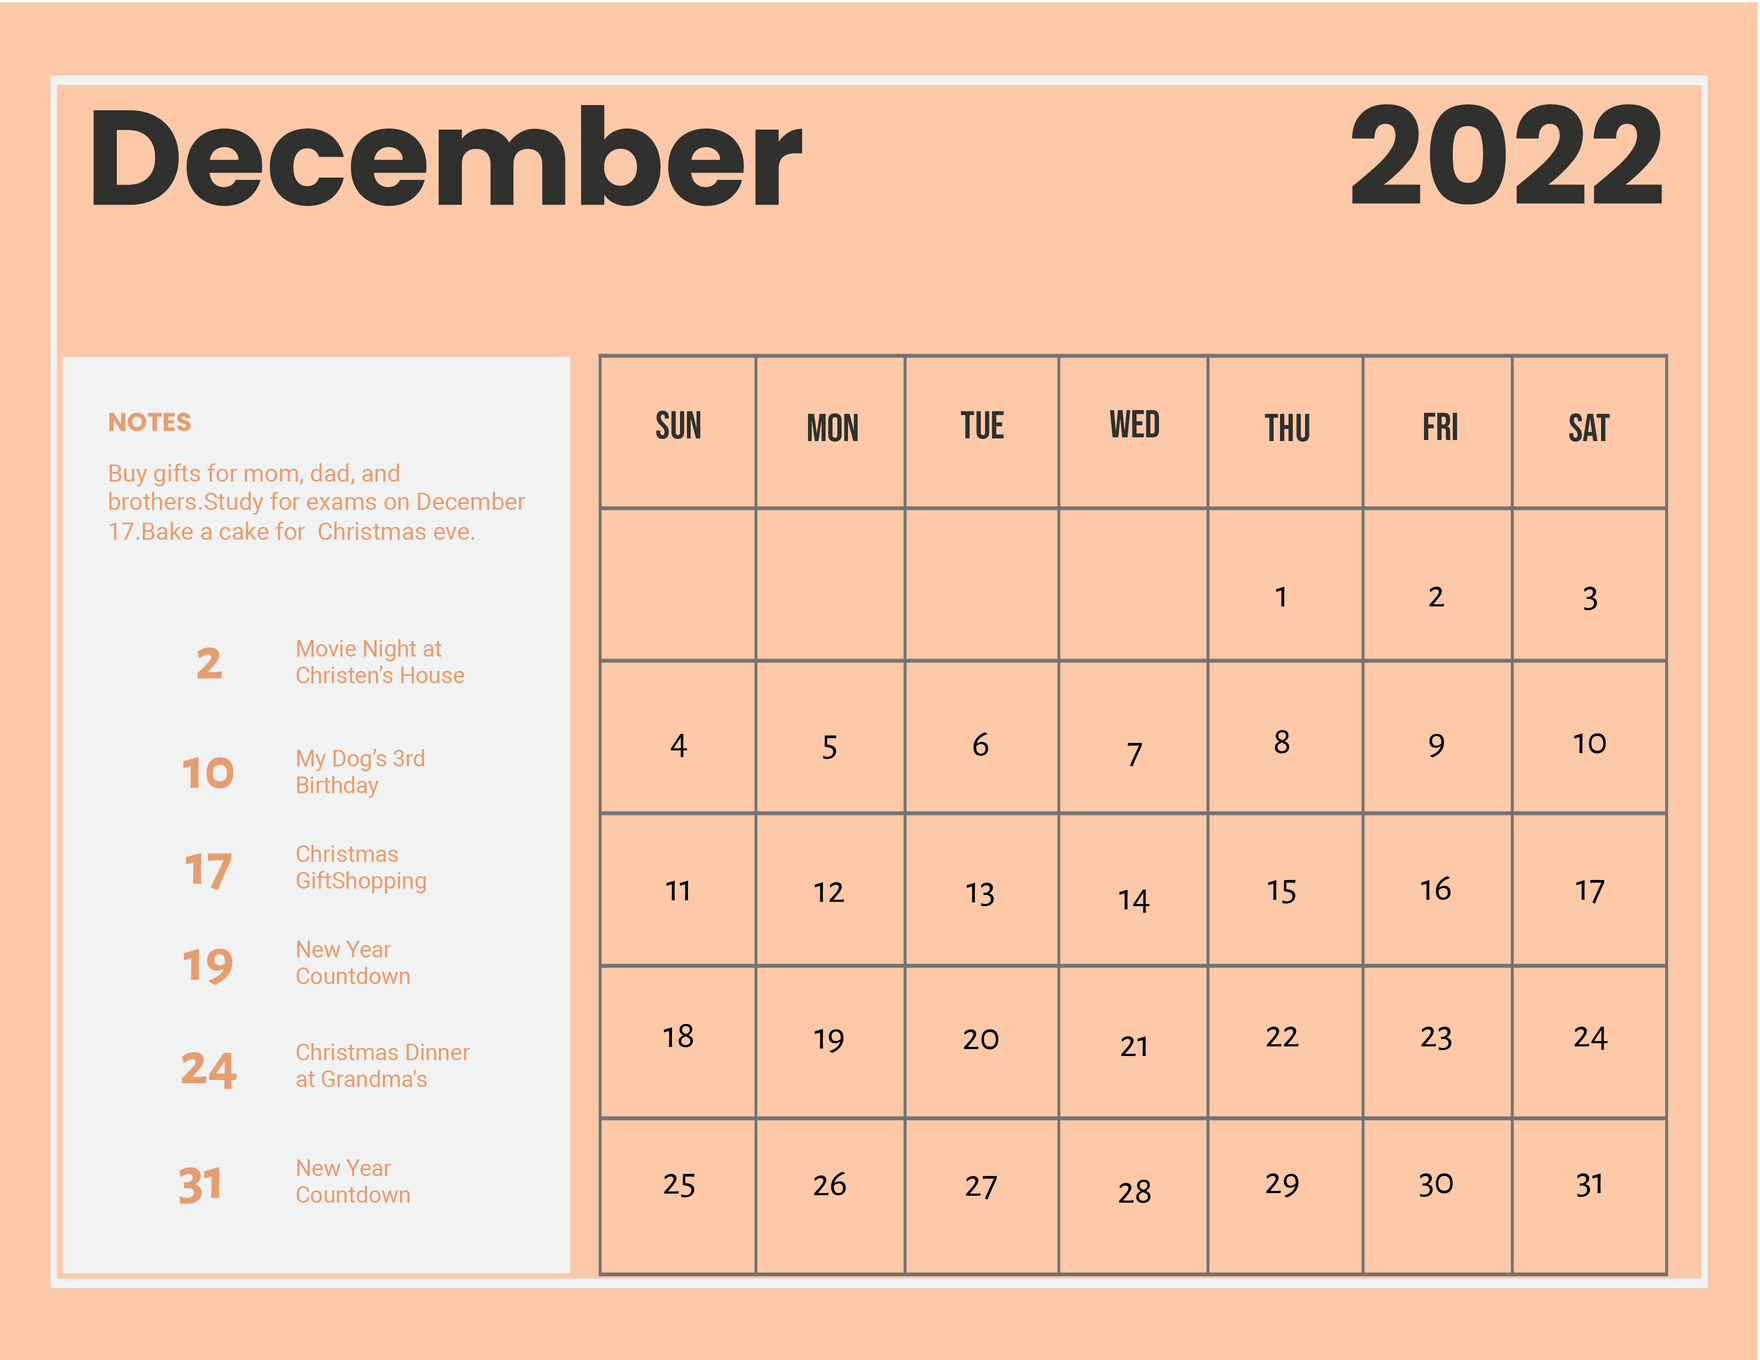 December 2022 Photo Calendar Template